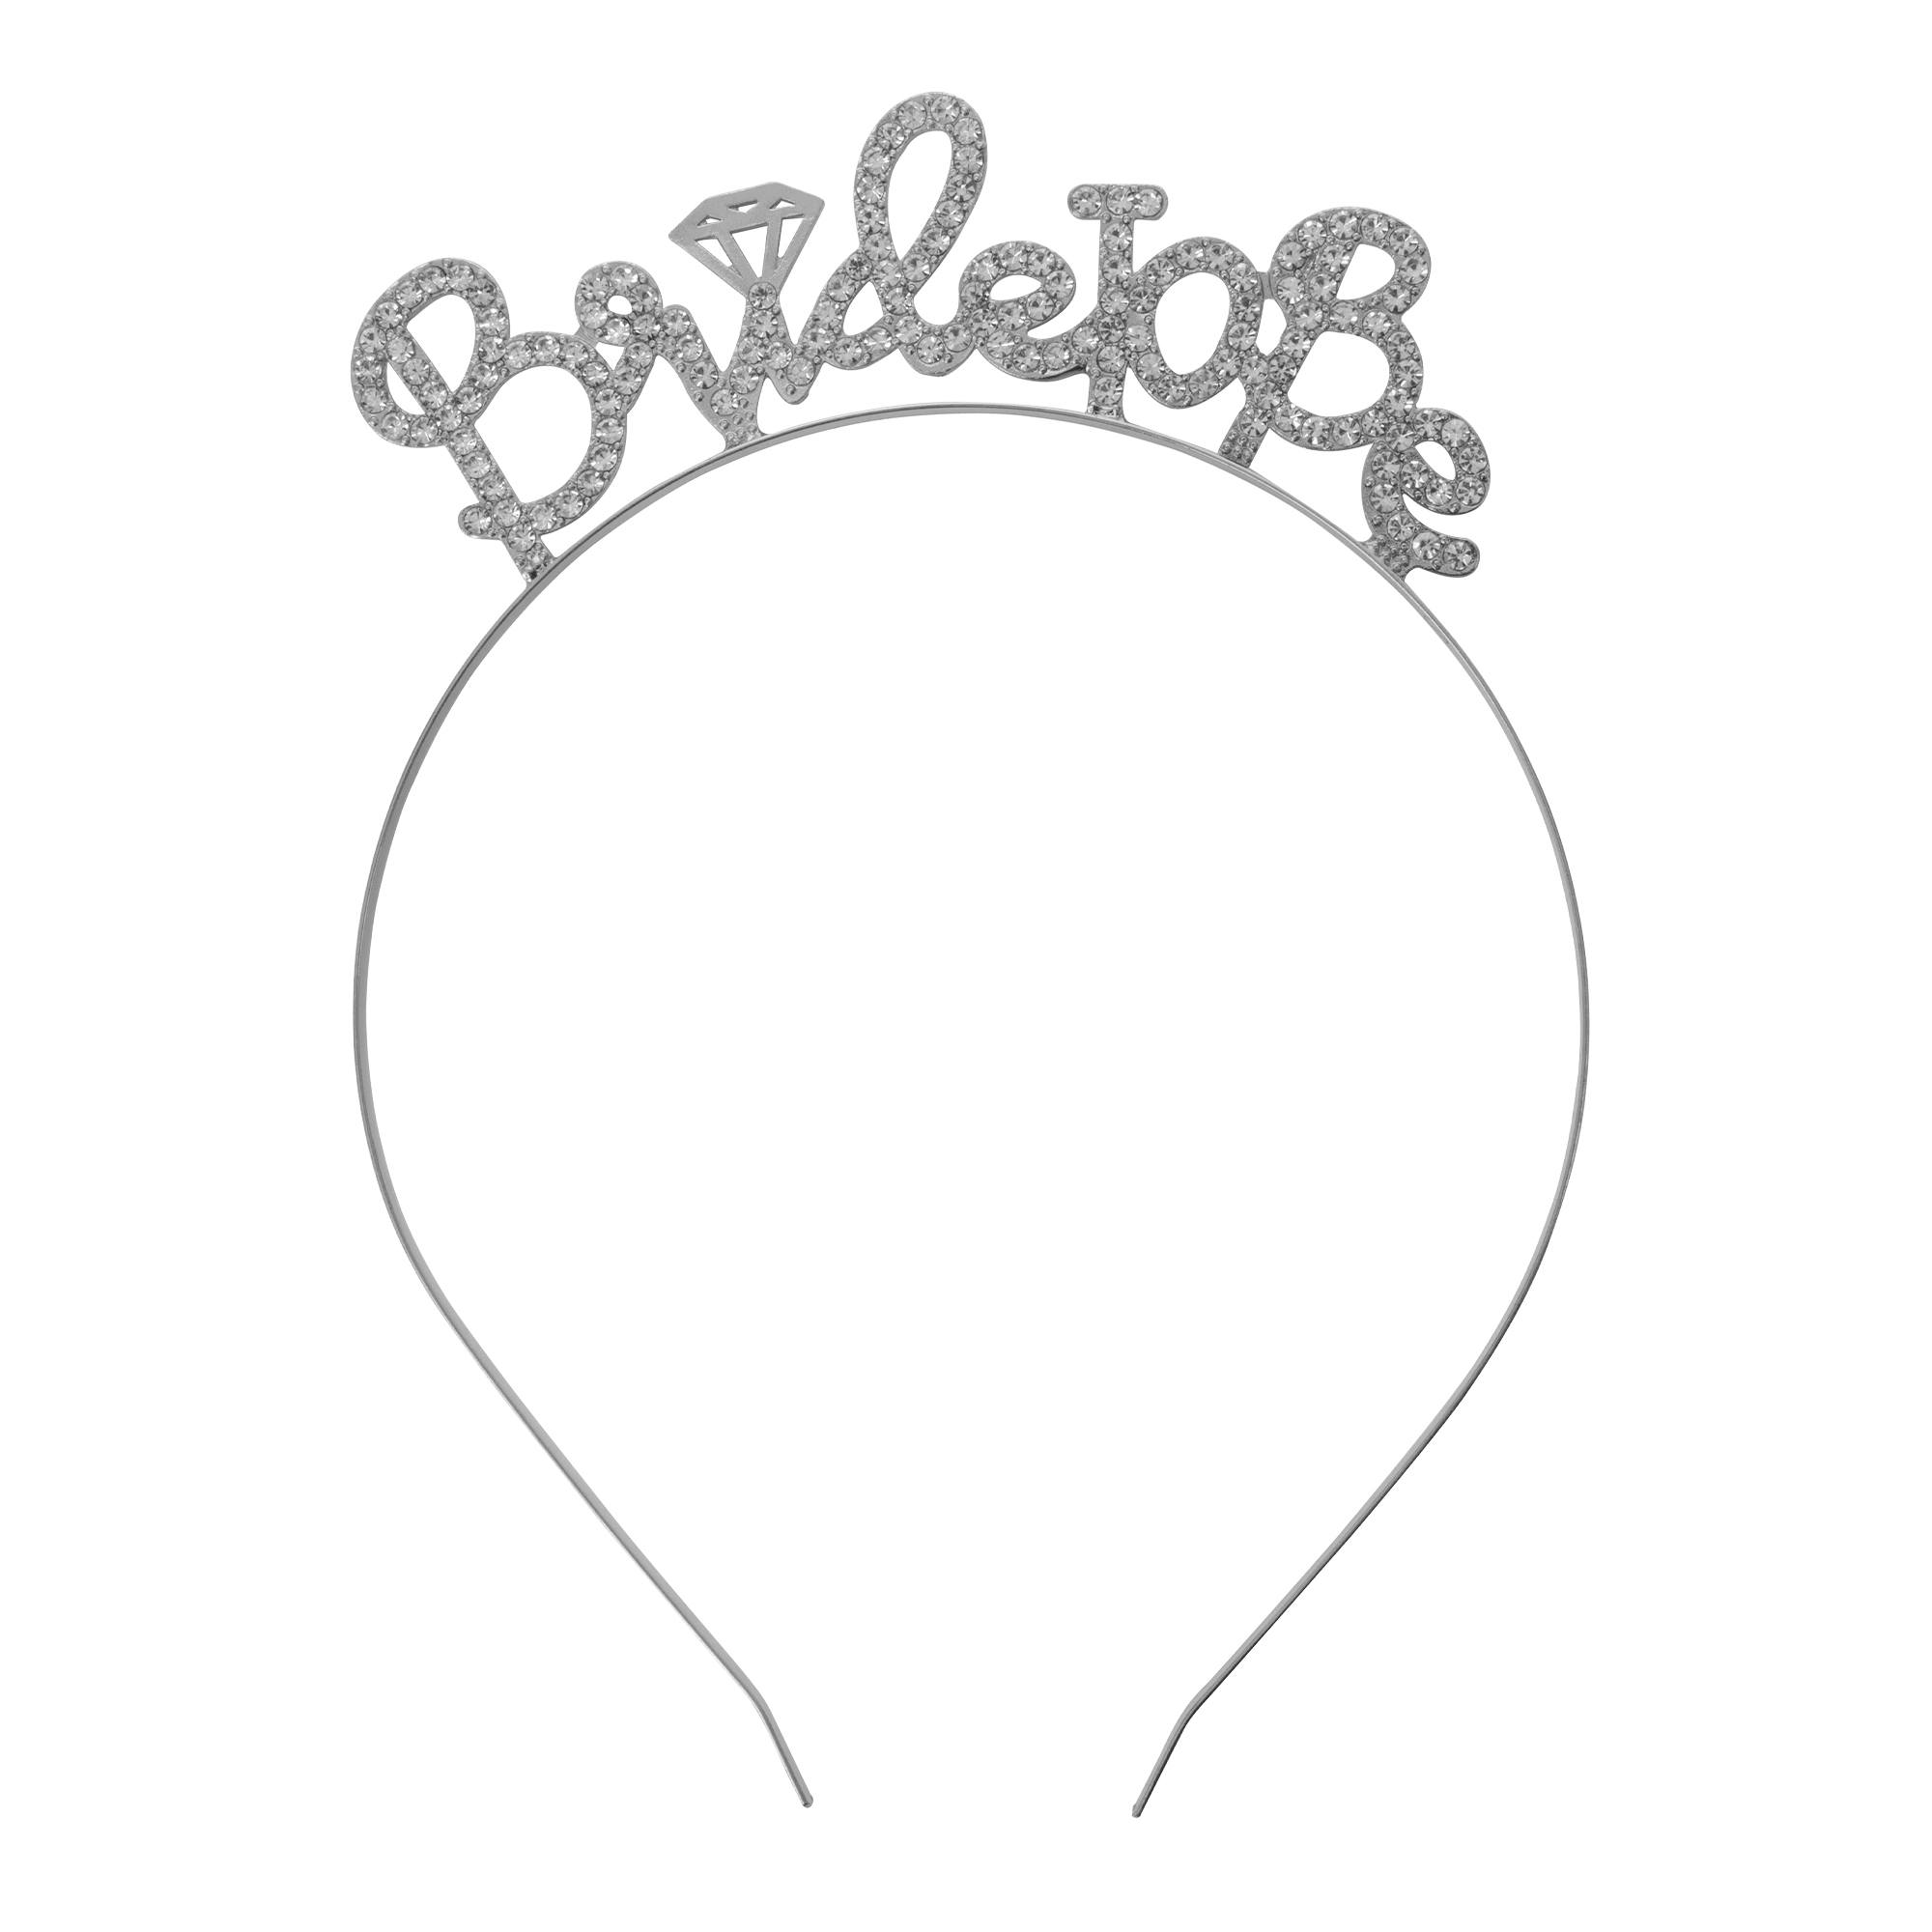 Headband "Bride to be" With Rhinestone 1¼" - Silver